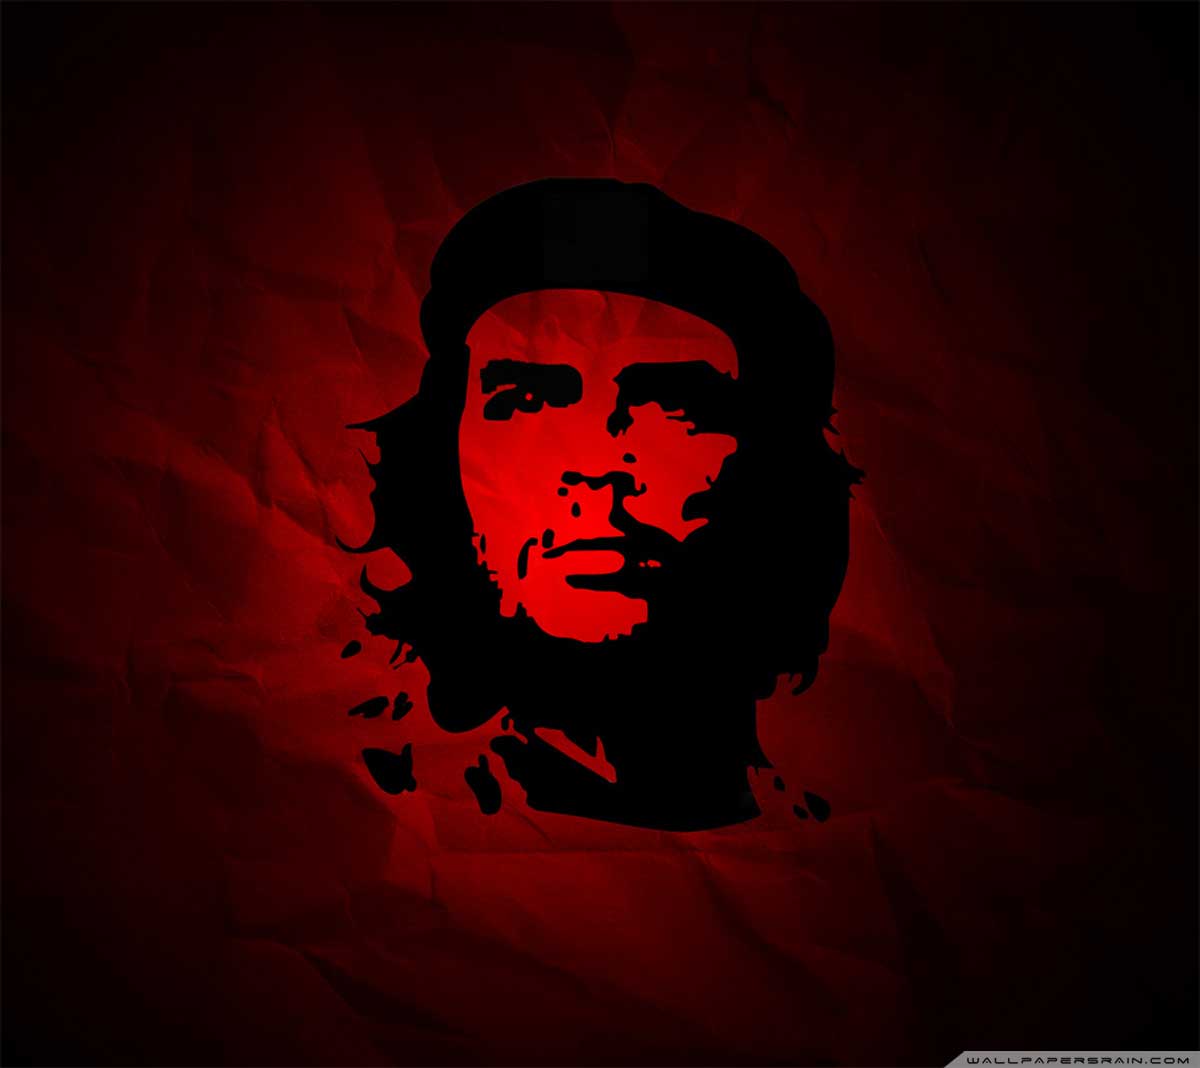 Wallpaper: Extraordinary Che Guevara Wallpaper. Che Guevara Wallpaper